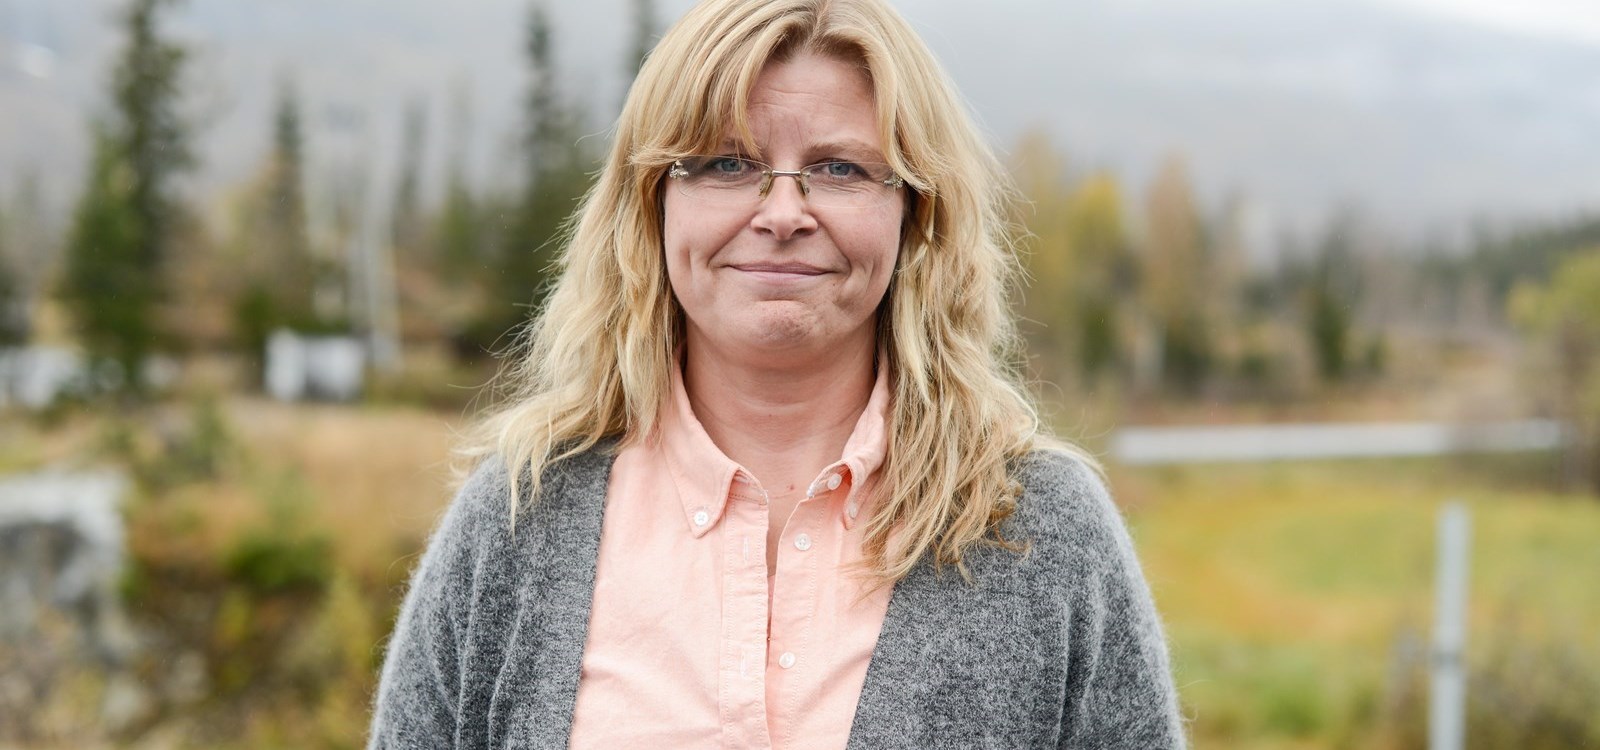 Ellen Bauer leiar eit avløysarlag i vekst som rekrutterar nye bønder i heile Valdres.